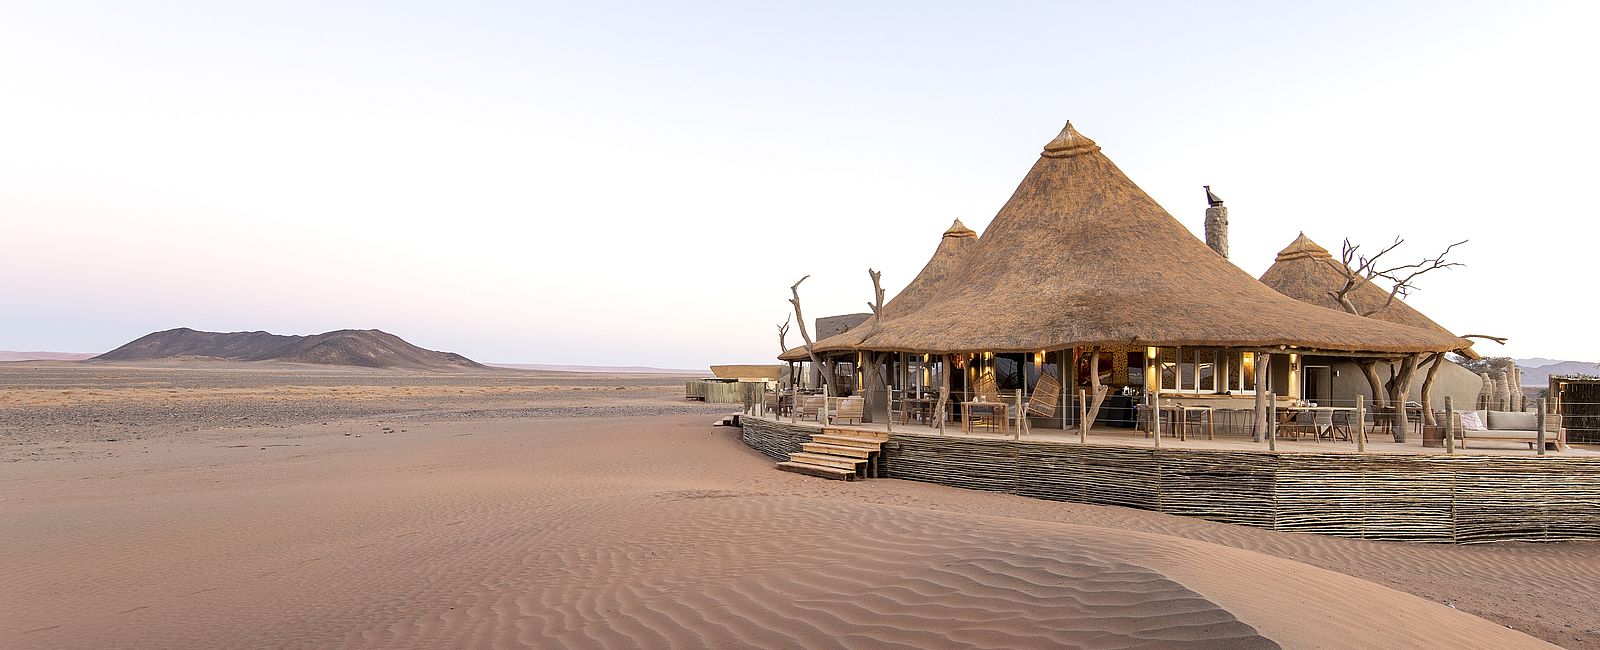 HOTEL NEWS
 Little Kulala Lodge in Namibia öffnet nach Umbau wieder 
